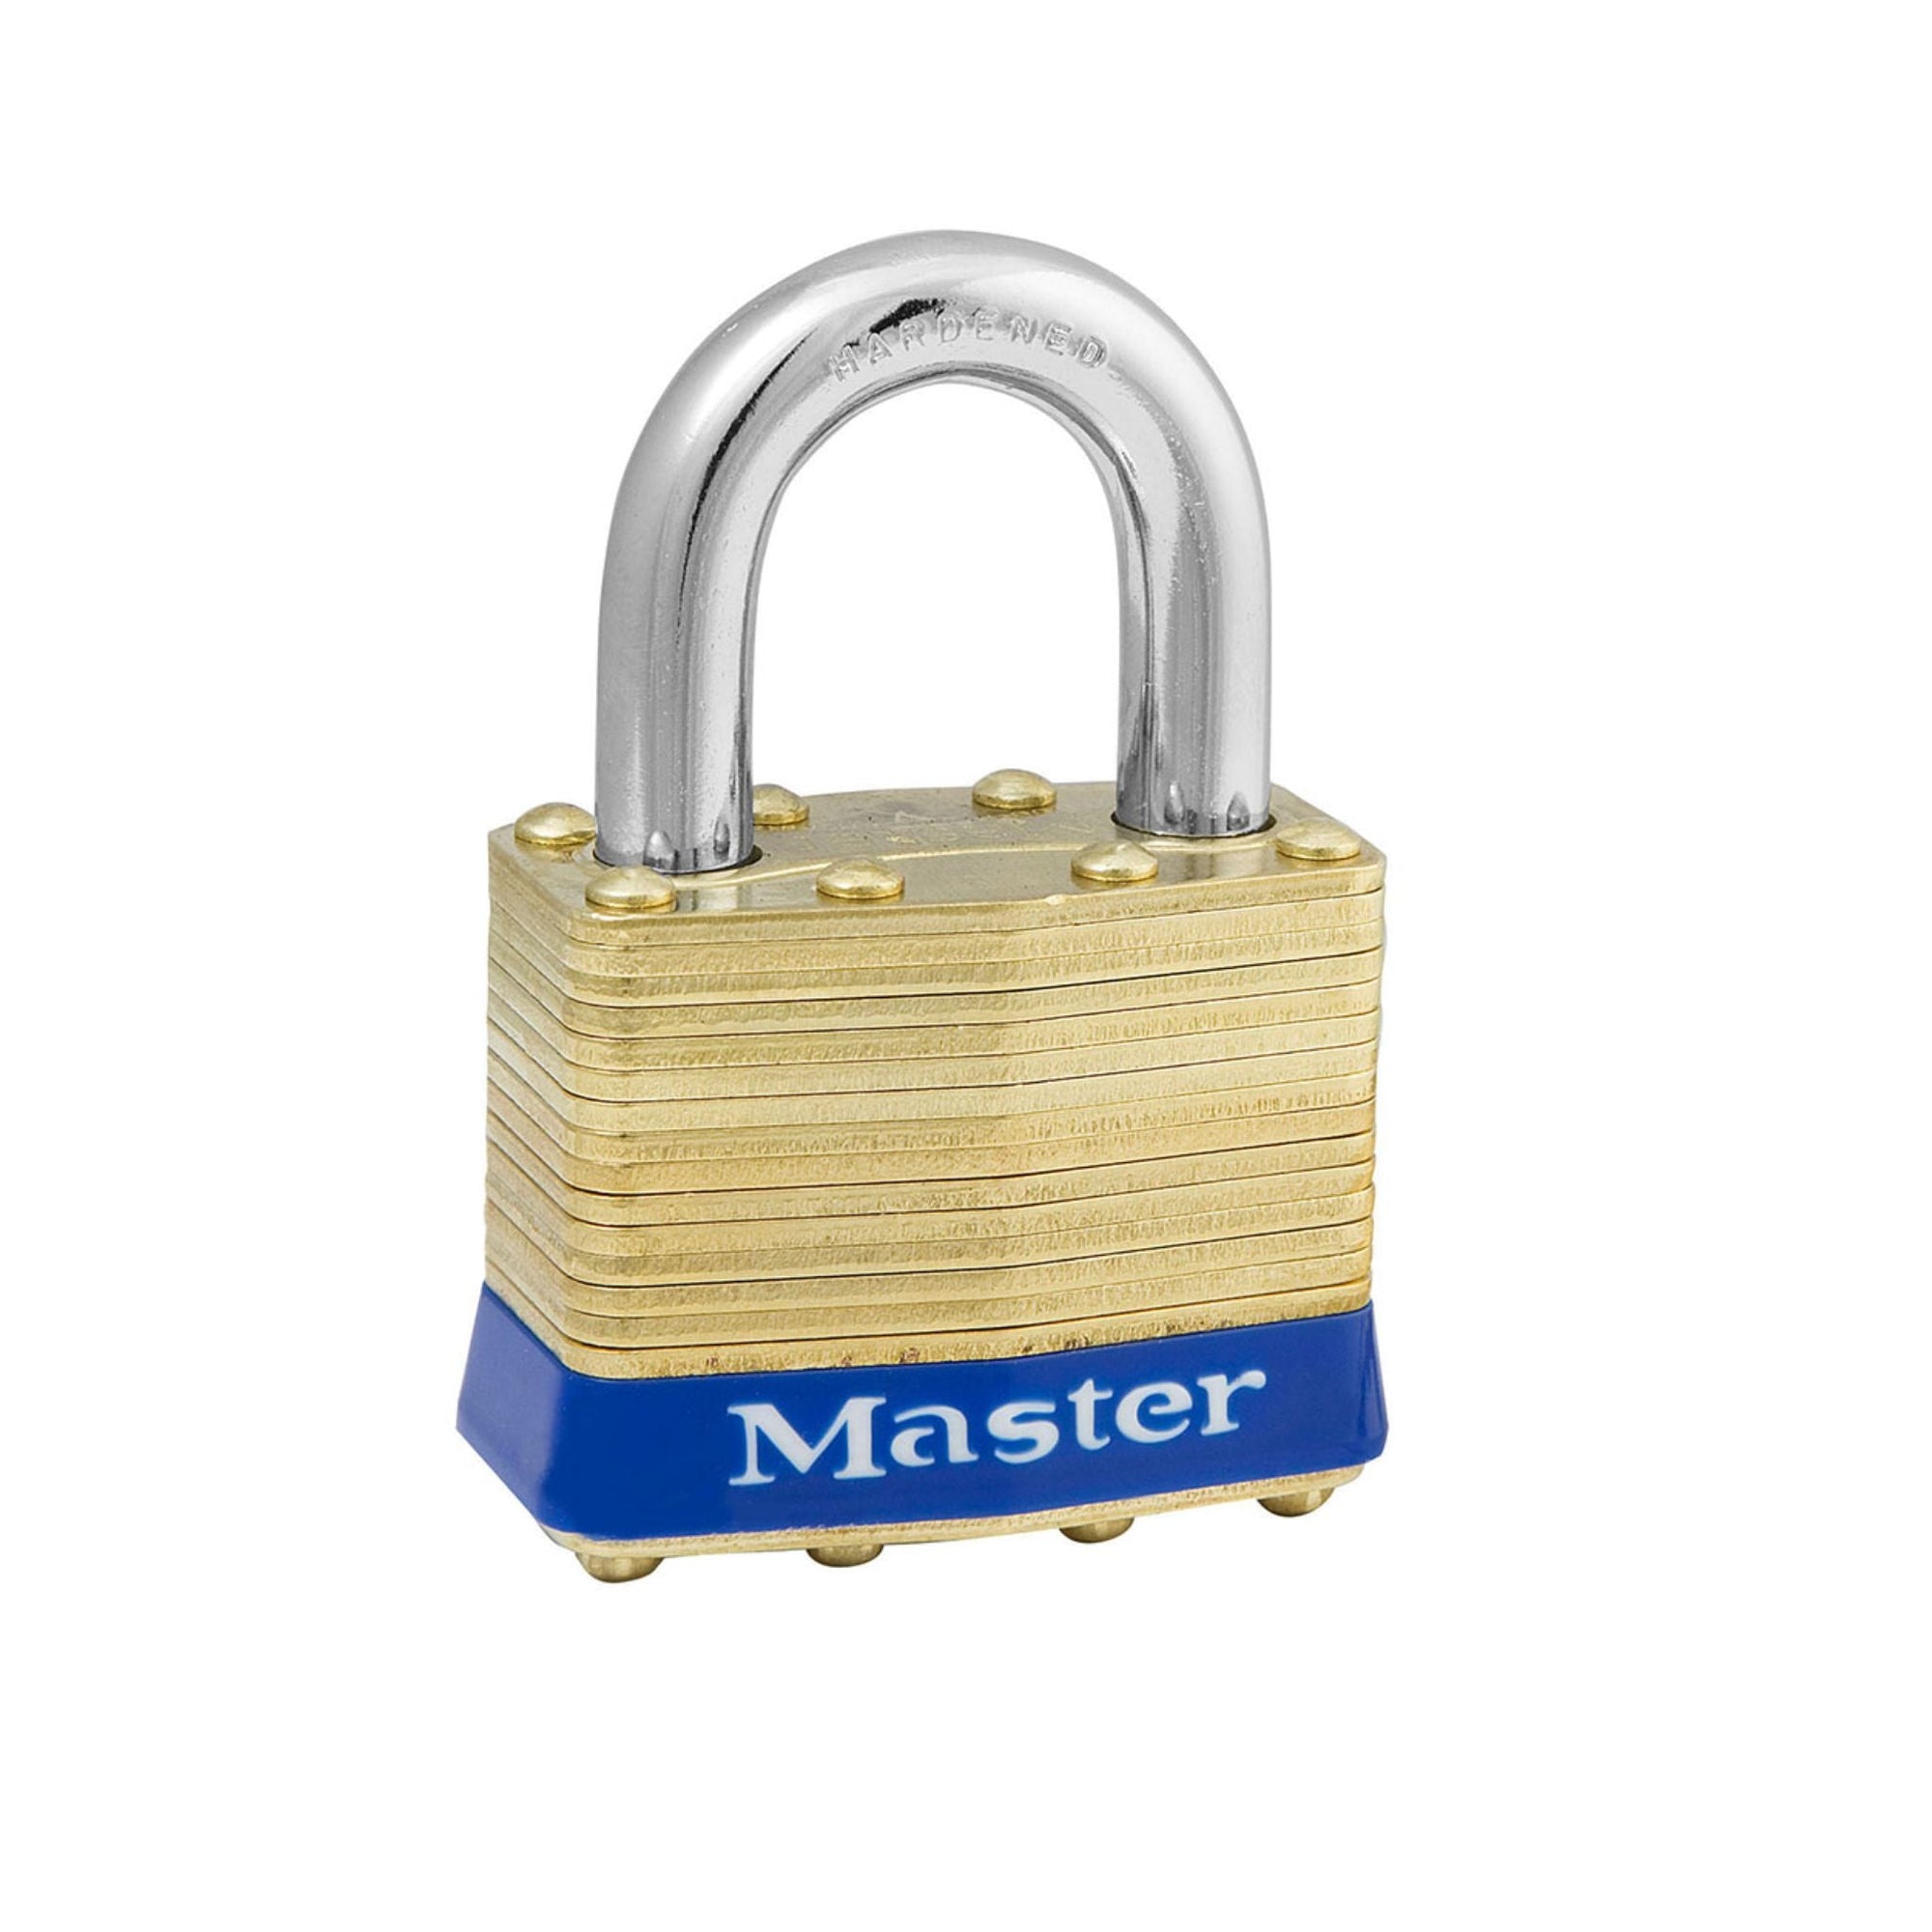 Master Lock 2KA 0306 Lock Laminated brass No. 2 Series Padlock Keyed to Match Existing Key Number KA0306 - The Lock Source